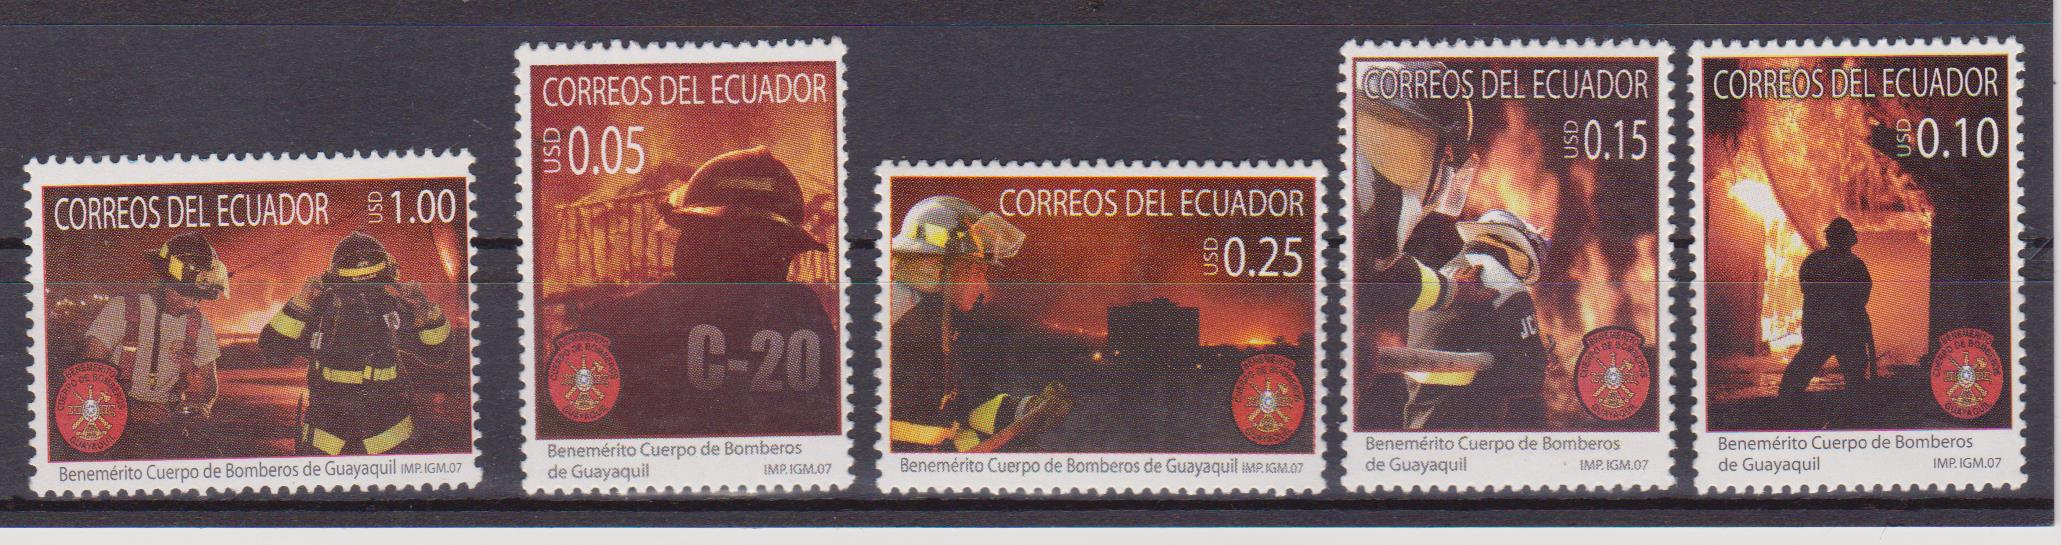 Ecuador pompieri 001